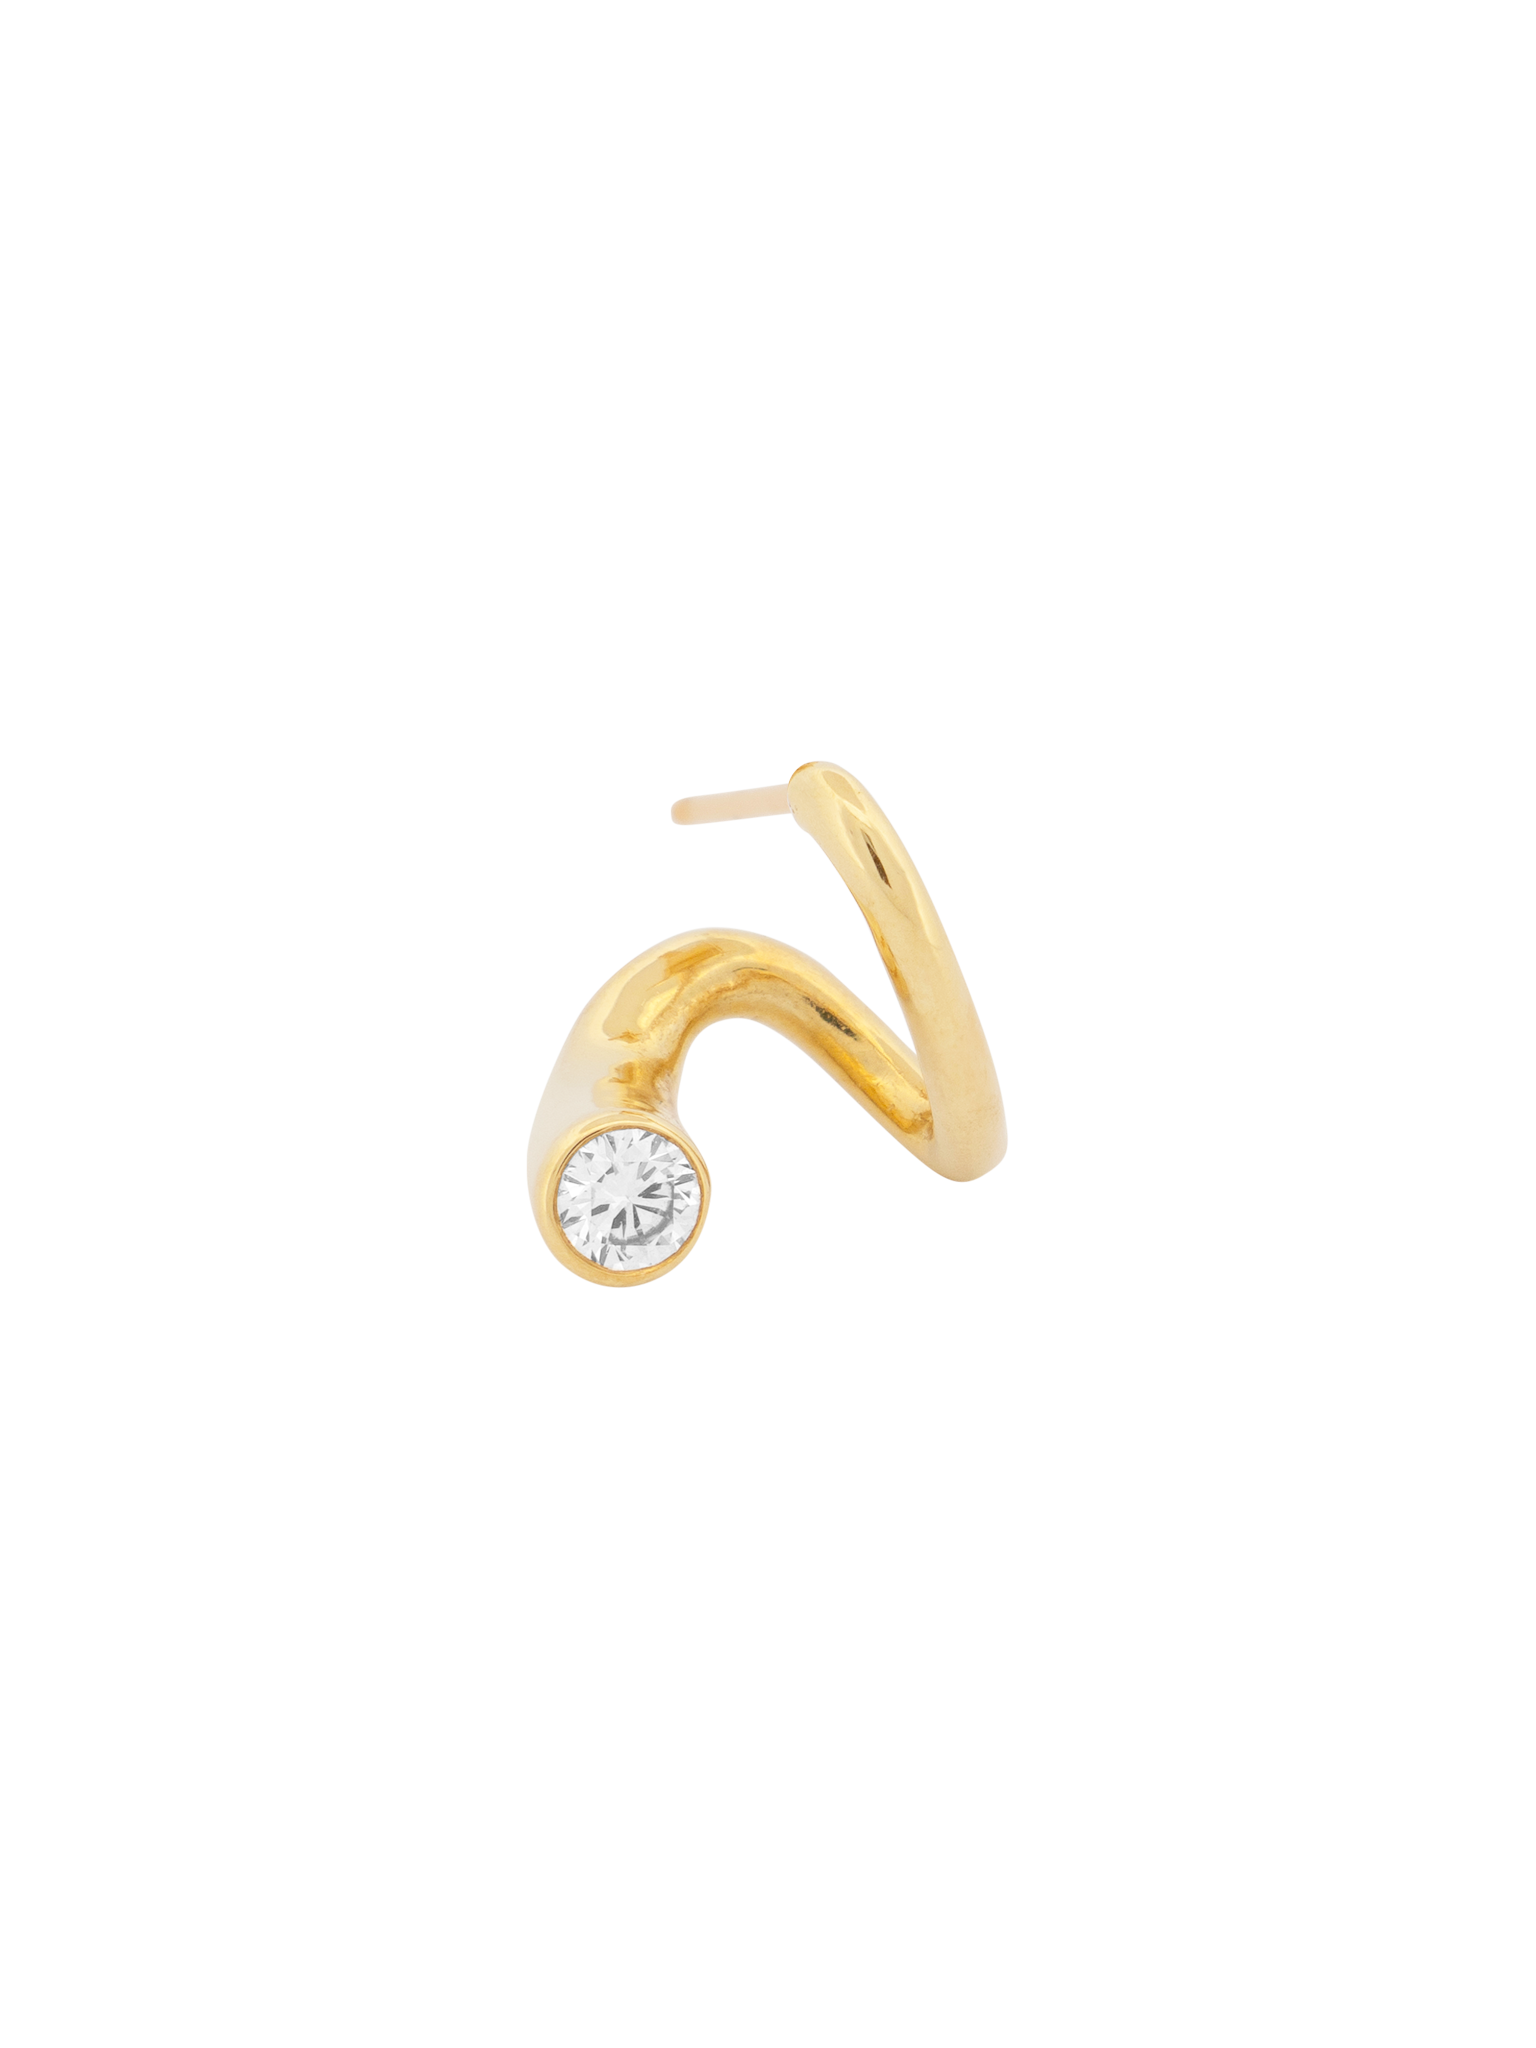 Peak diamond earring